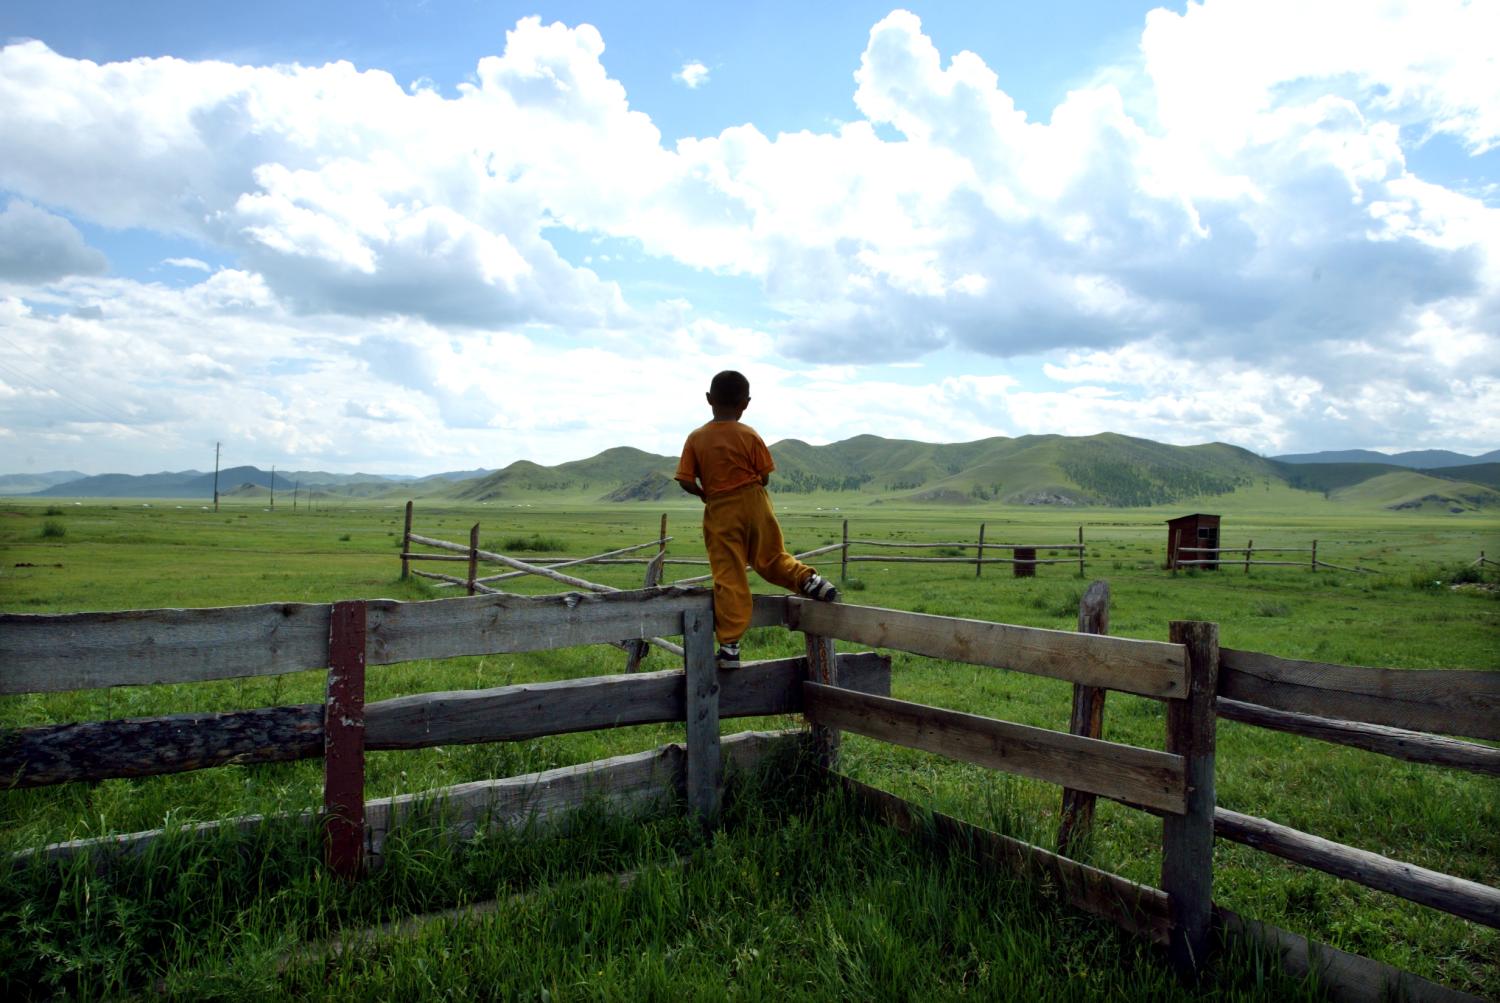 Child in Mongolia